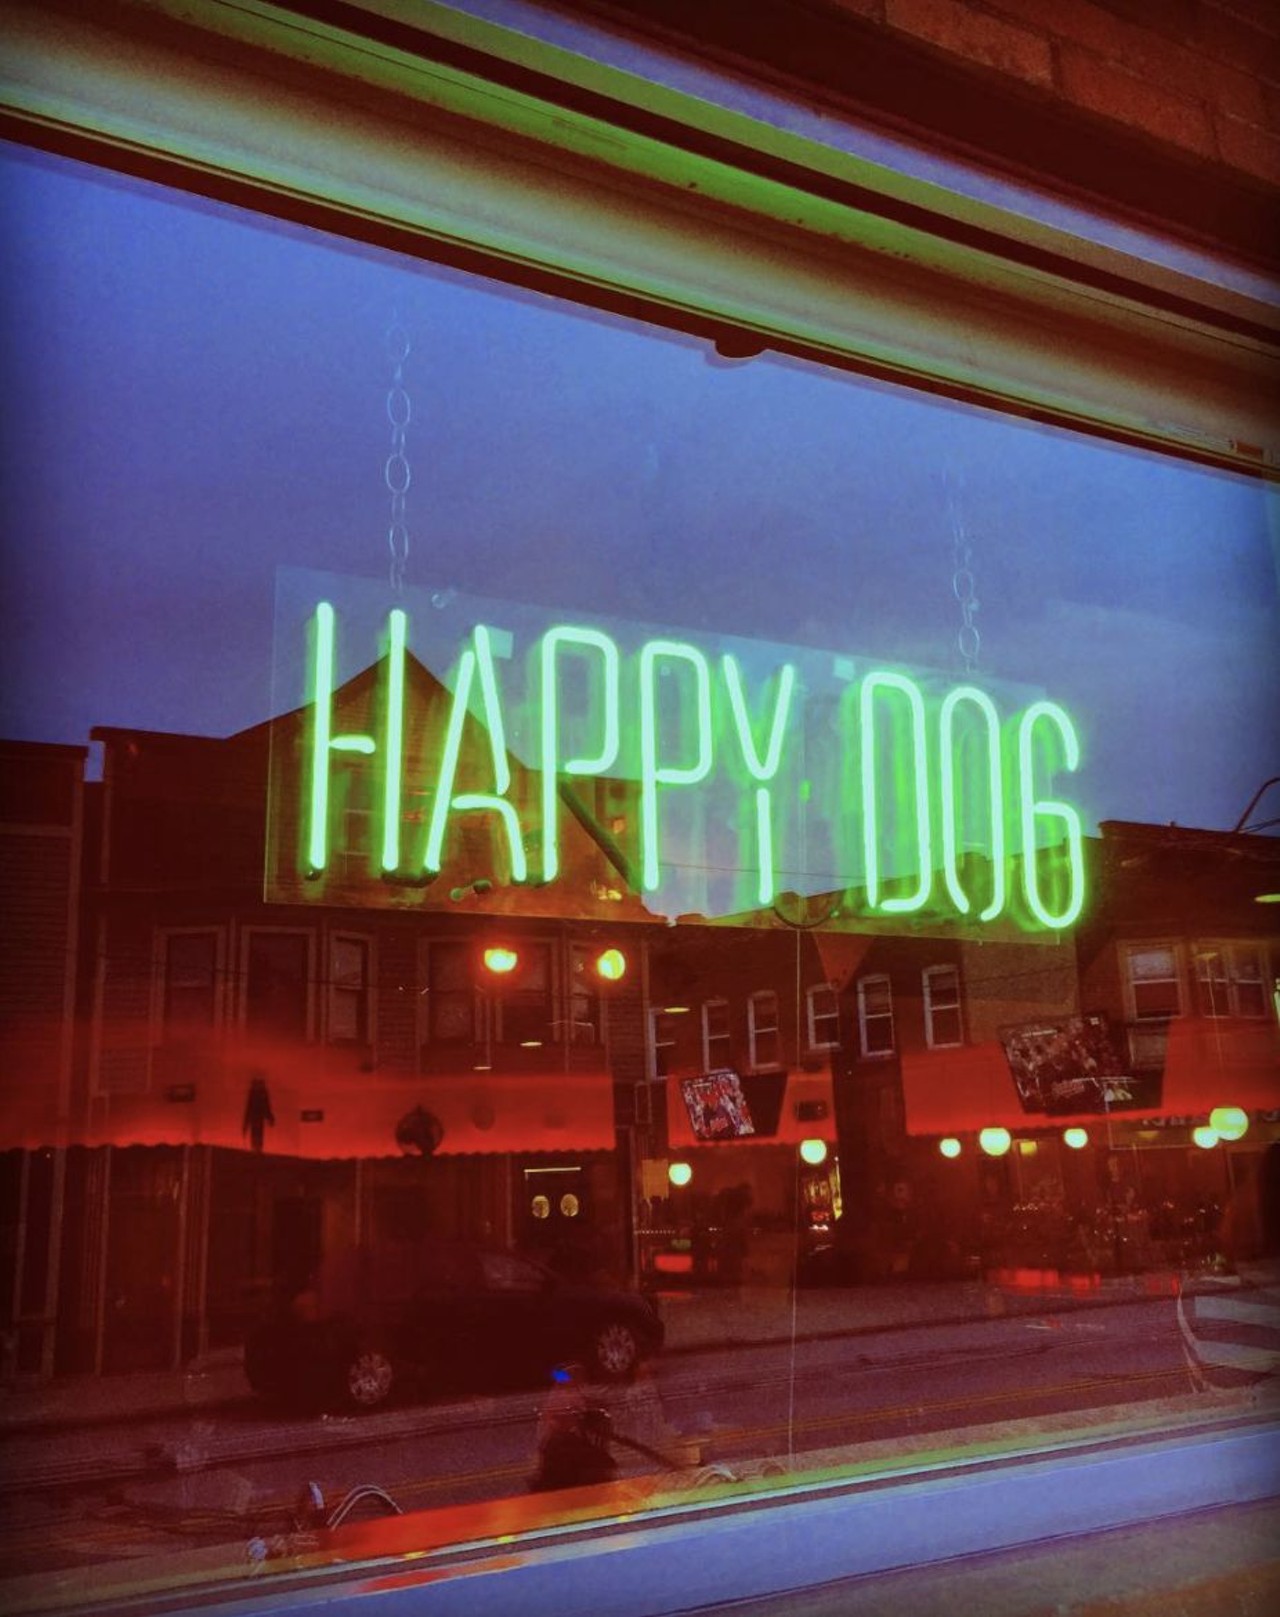  Keep Talking at Happy Dog
Wed. Dec. 6
Photo via MYKPorter Instagram